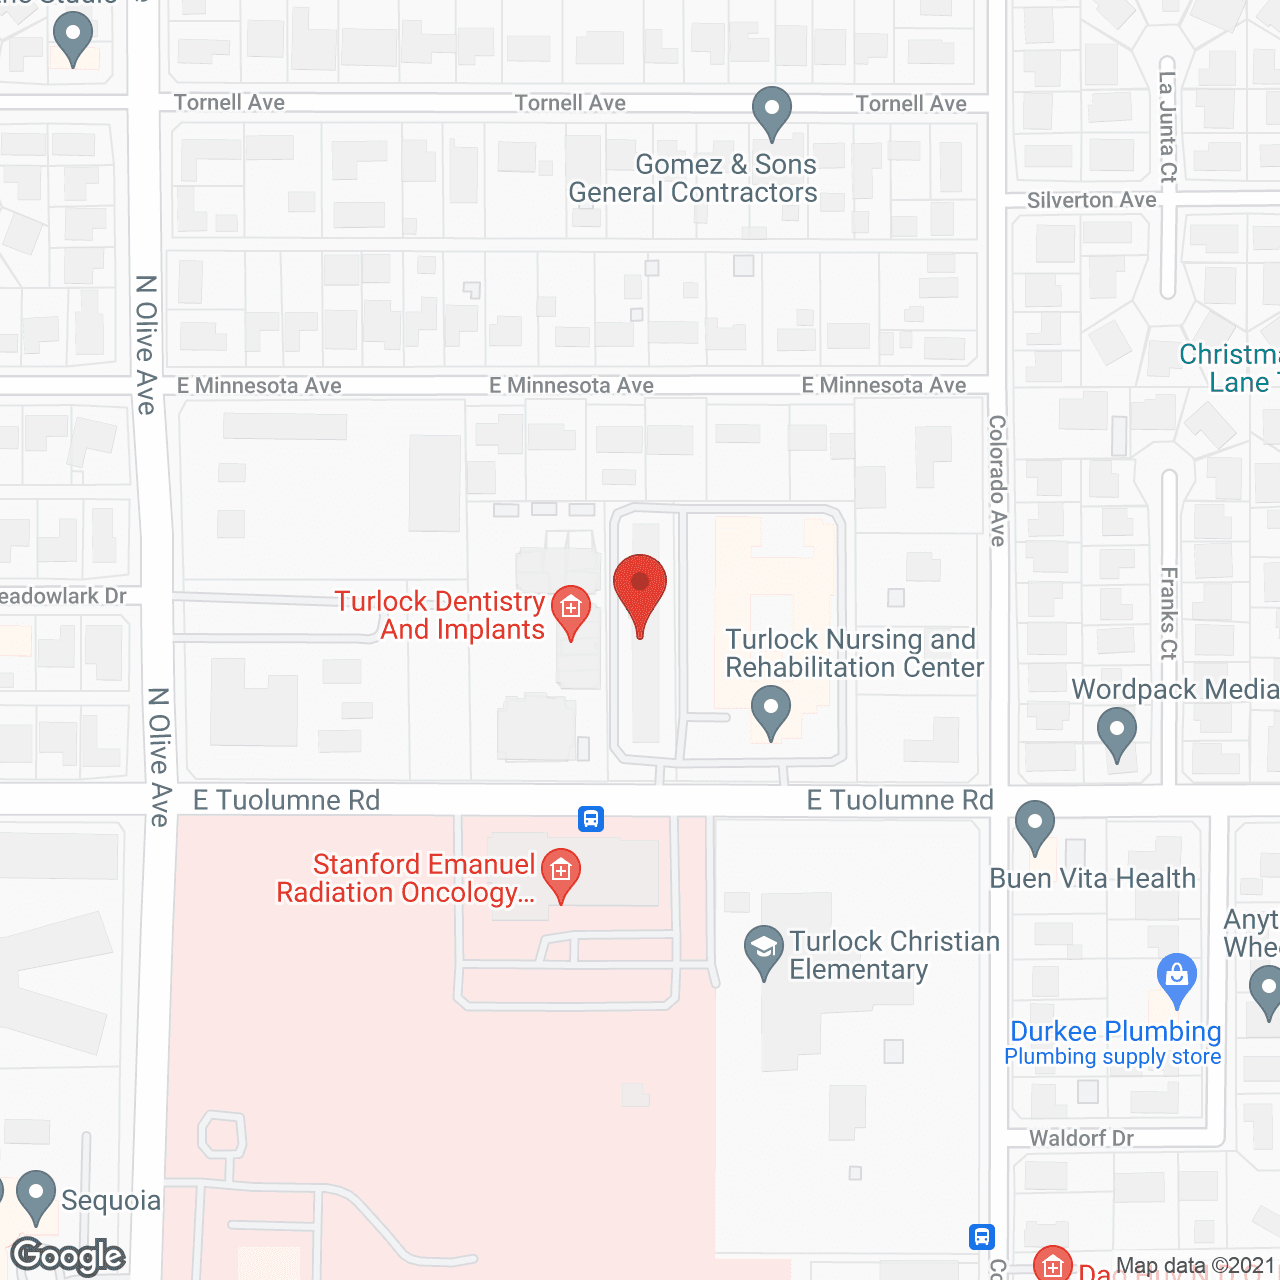 Turlock Residential in google map